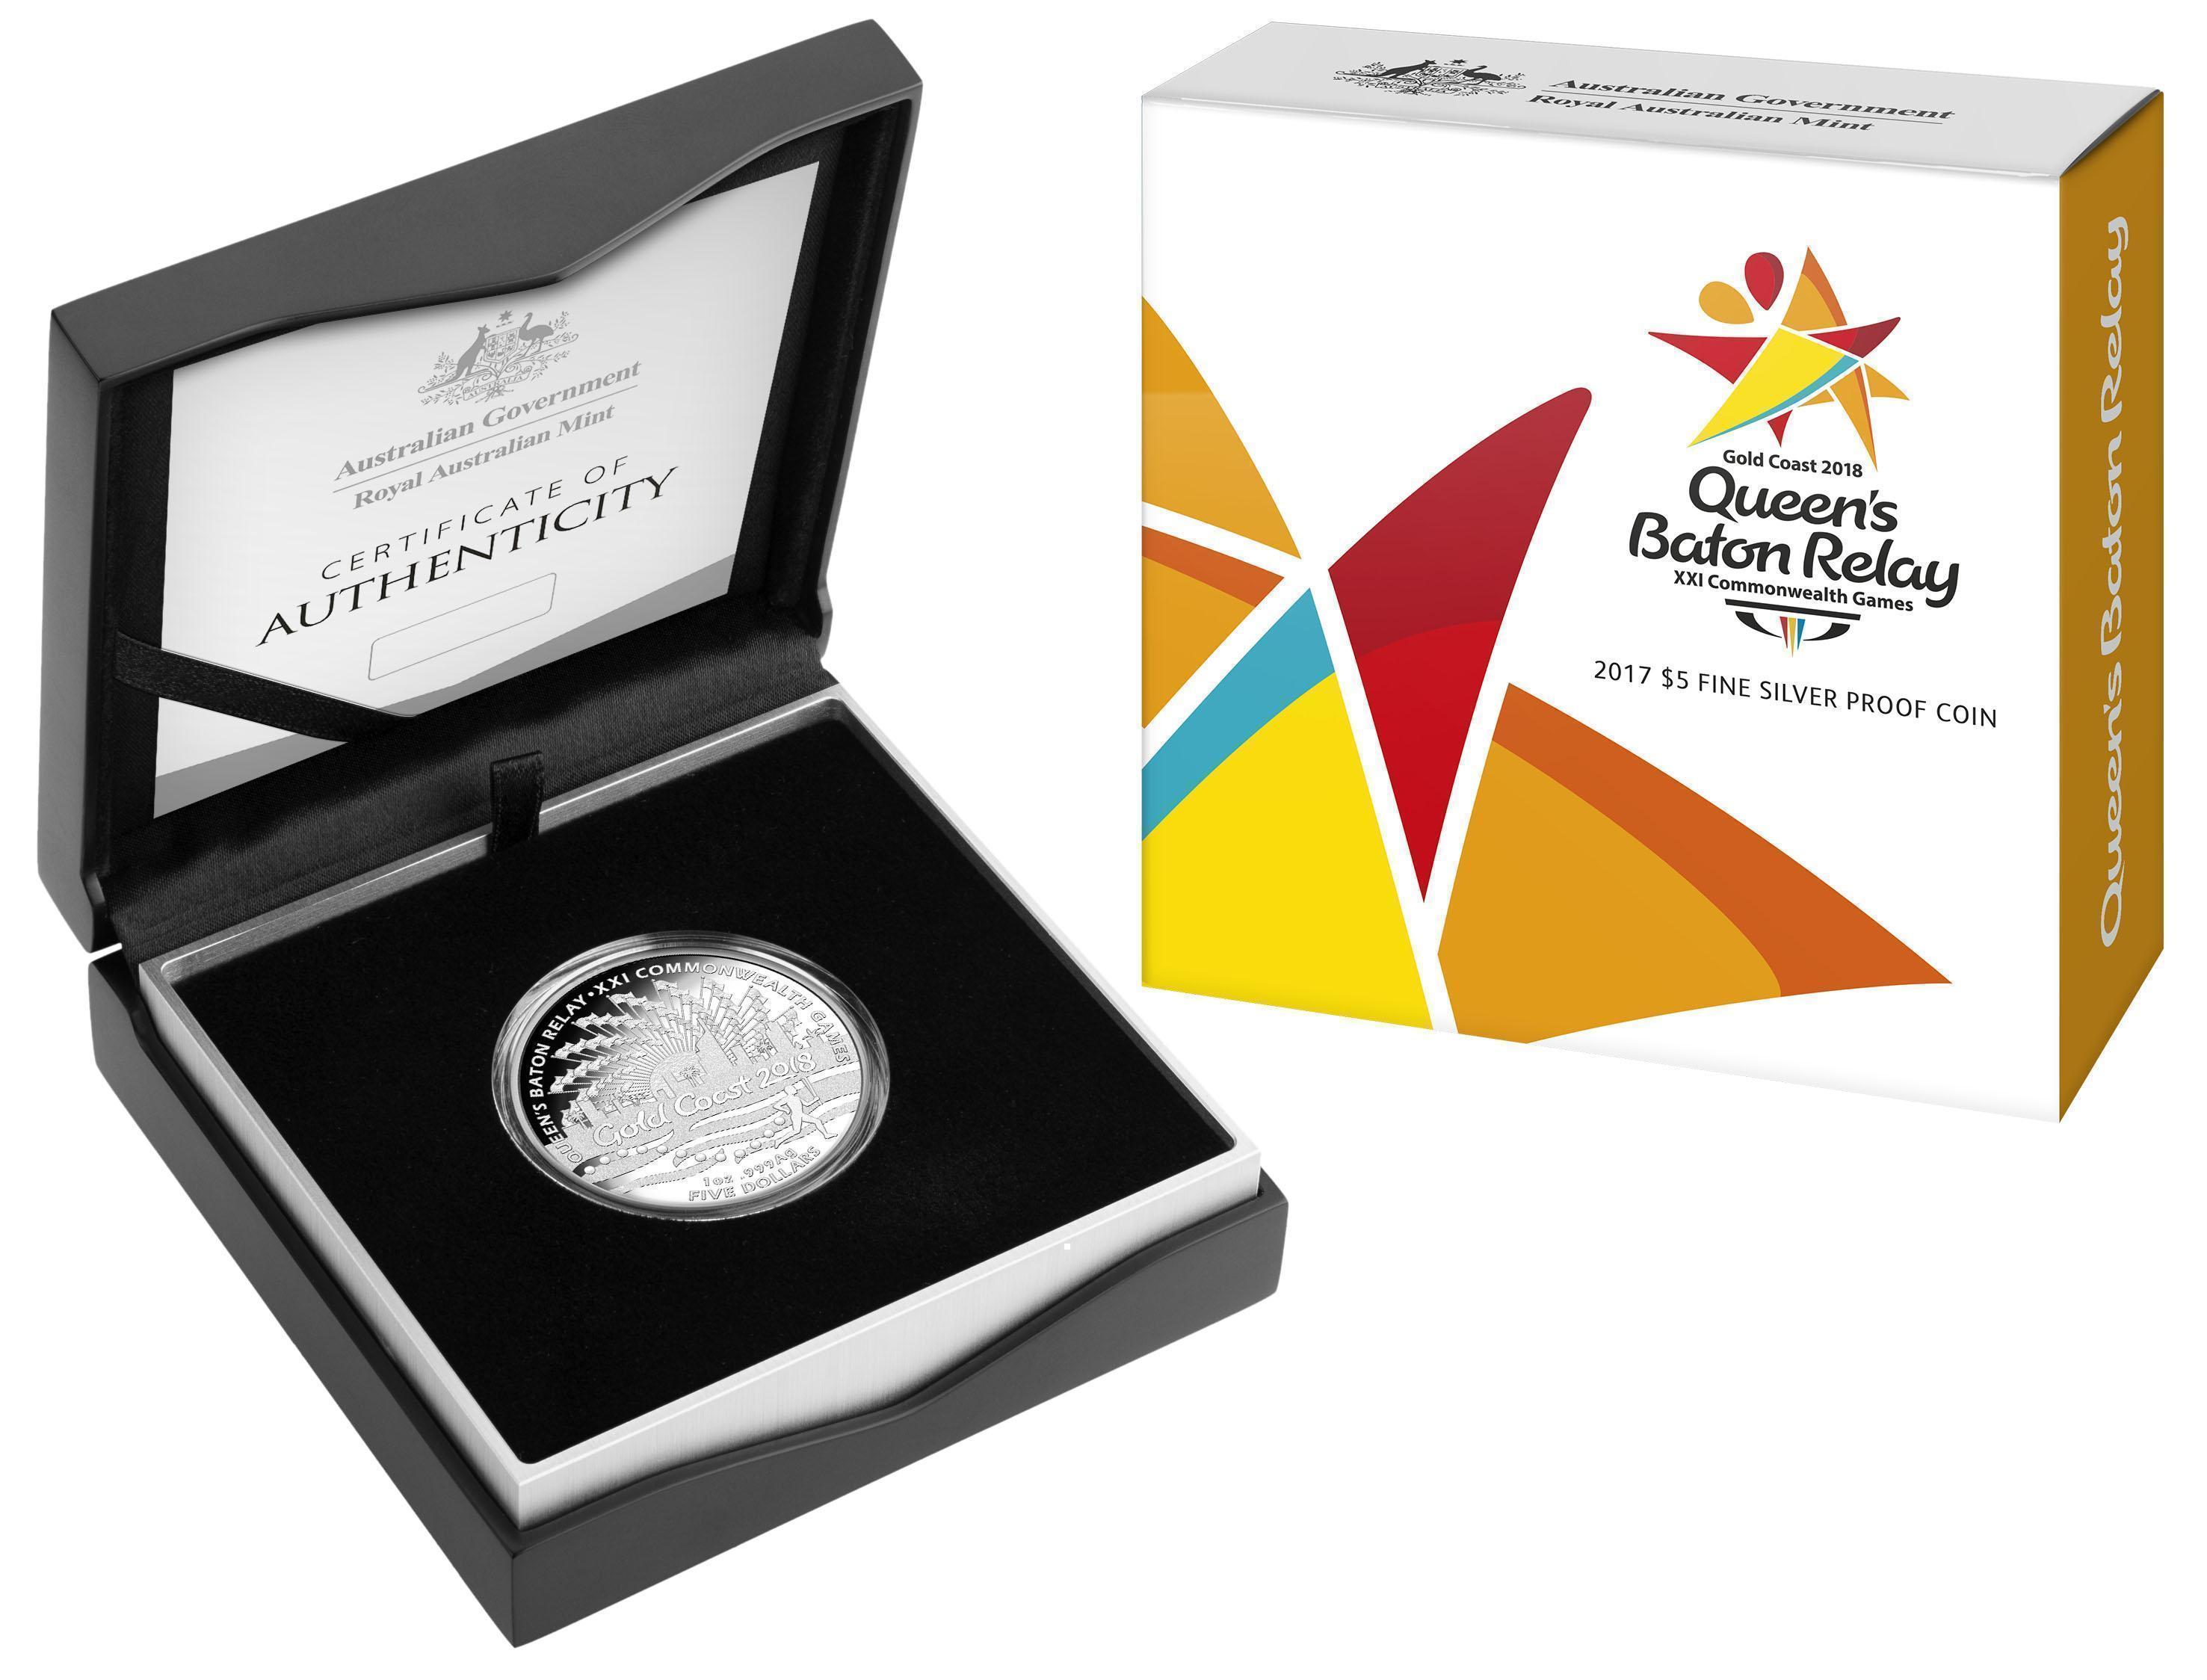 2017 Queen's Baton Relay XXI Commonwealth Games Gold Coast 2018 $5 Fine Silver Proof Coin Royal Australian Mint RAM